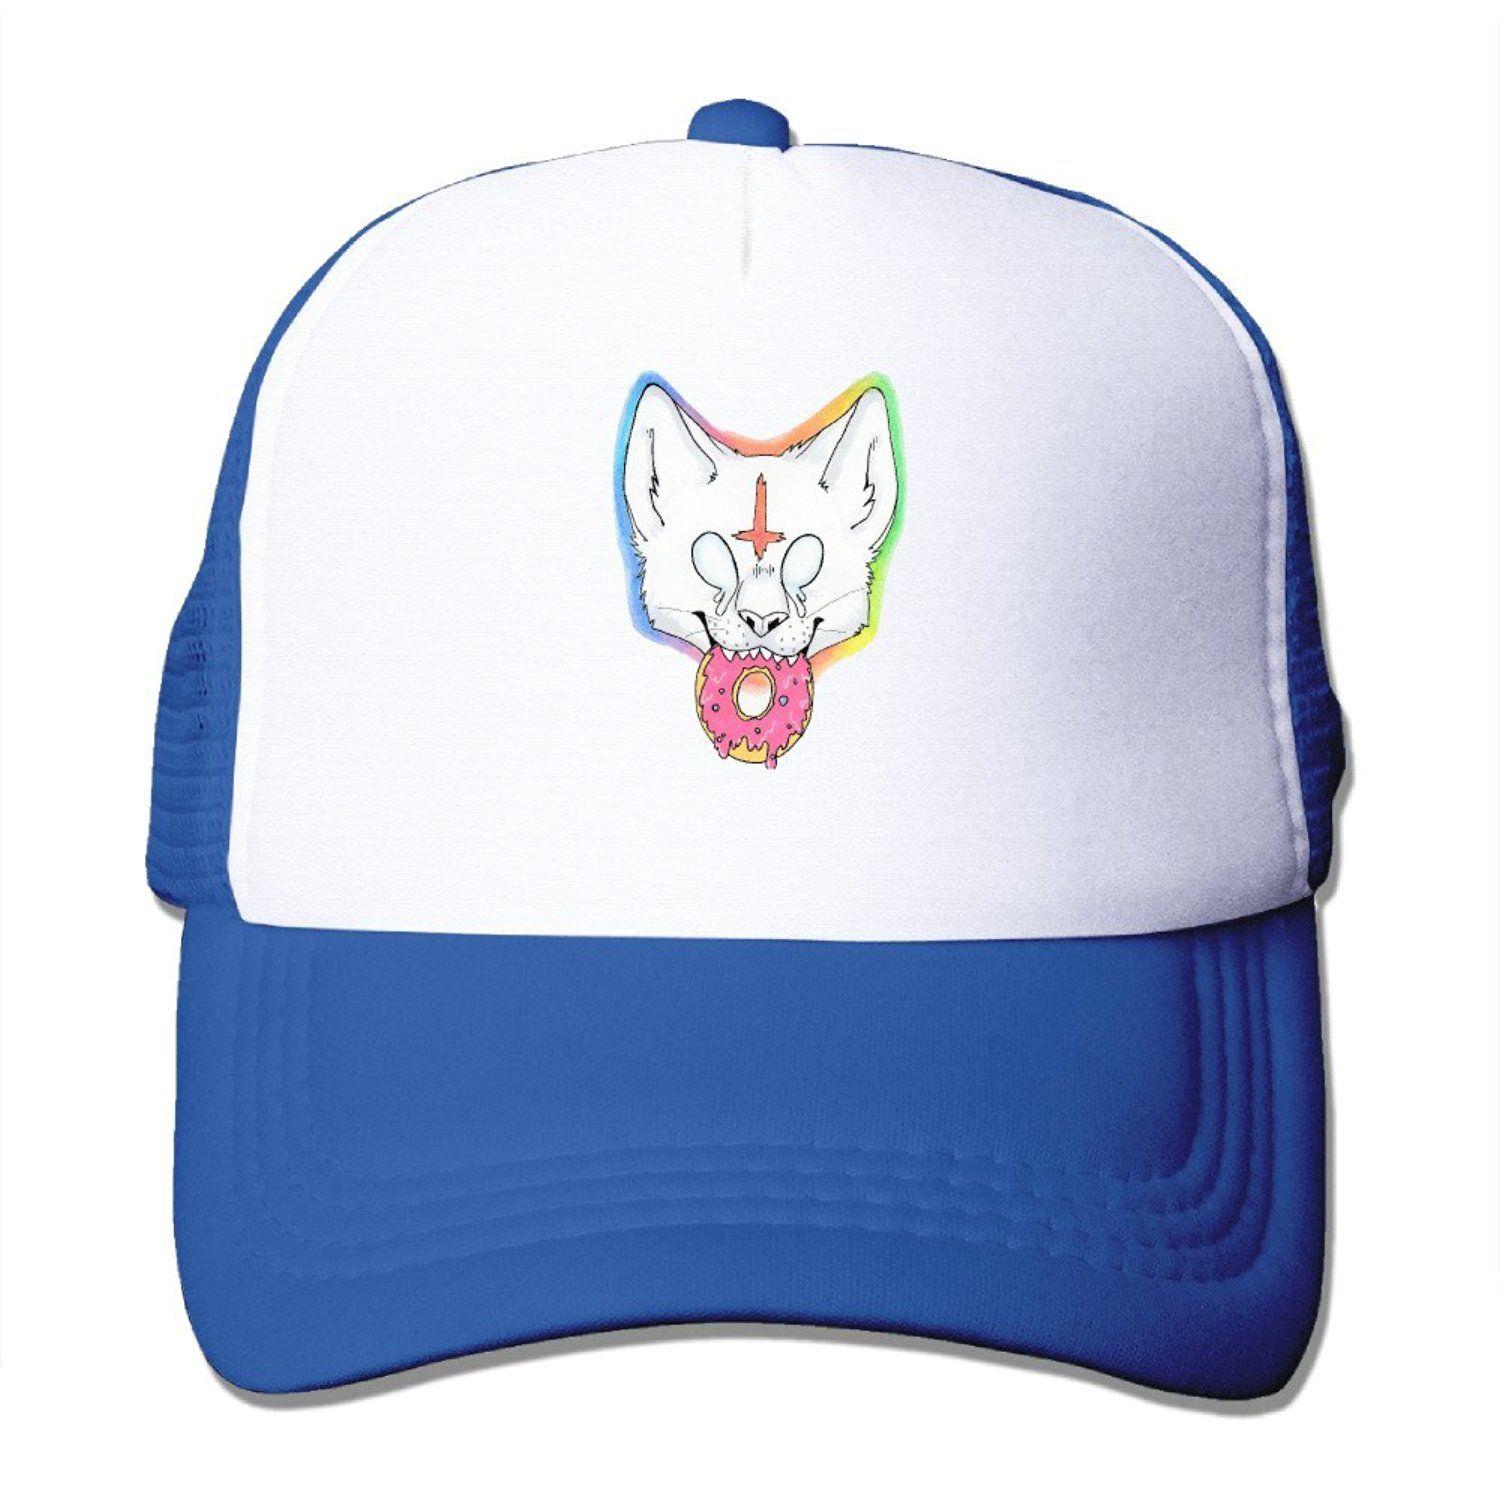 Odd Future Wolf Logo - Buy REBORN Odd Future Wolf Logo Unisex Up Adjustable Baseball Cap